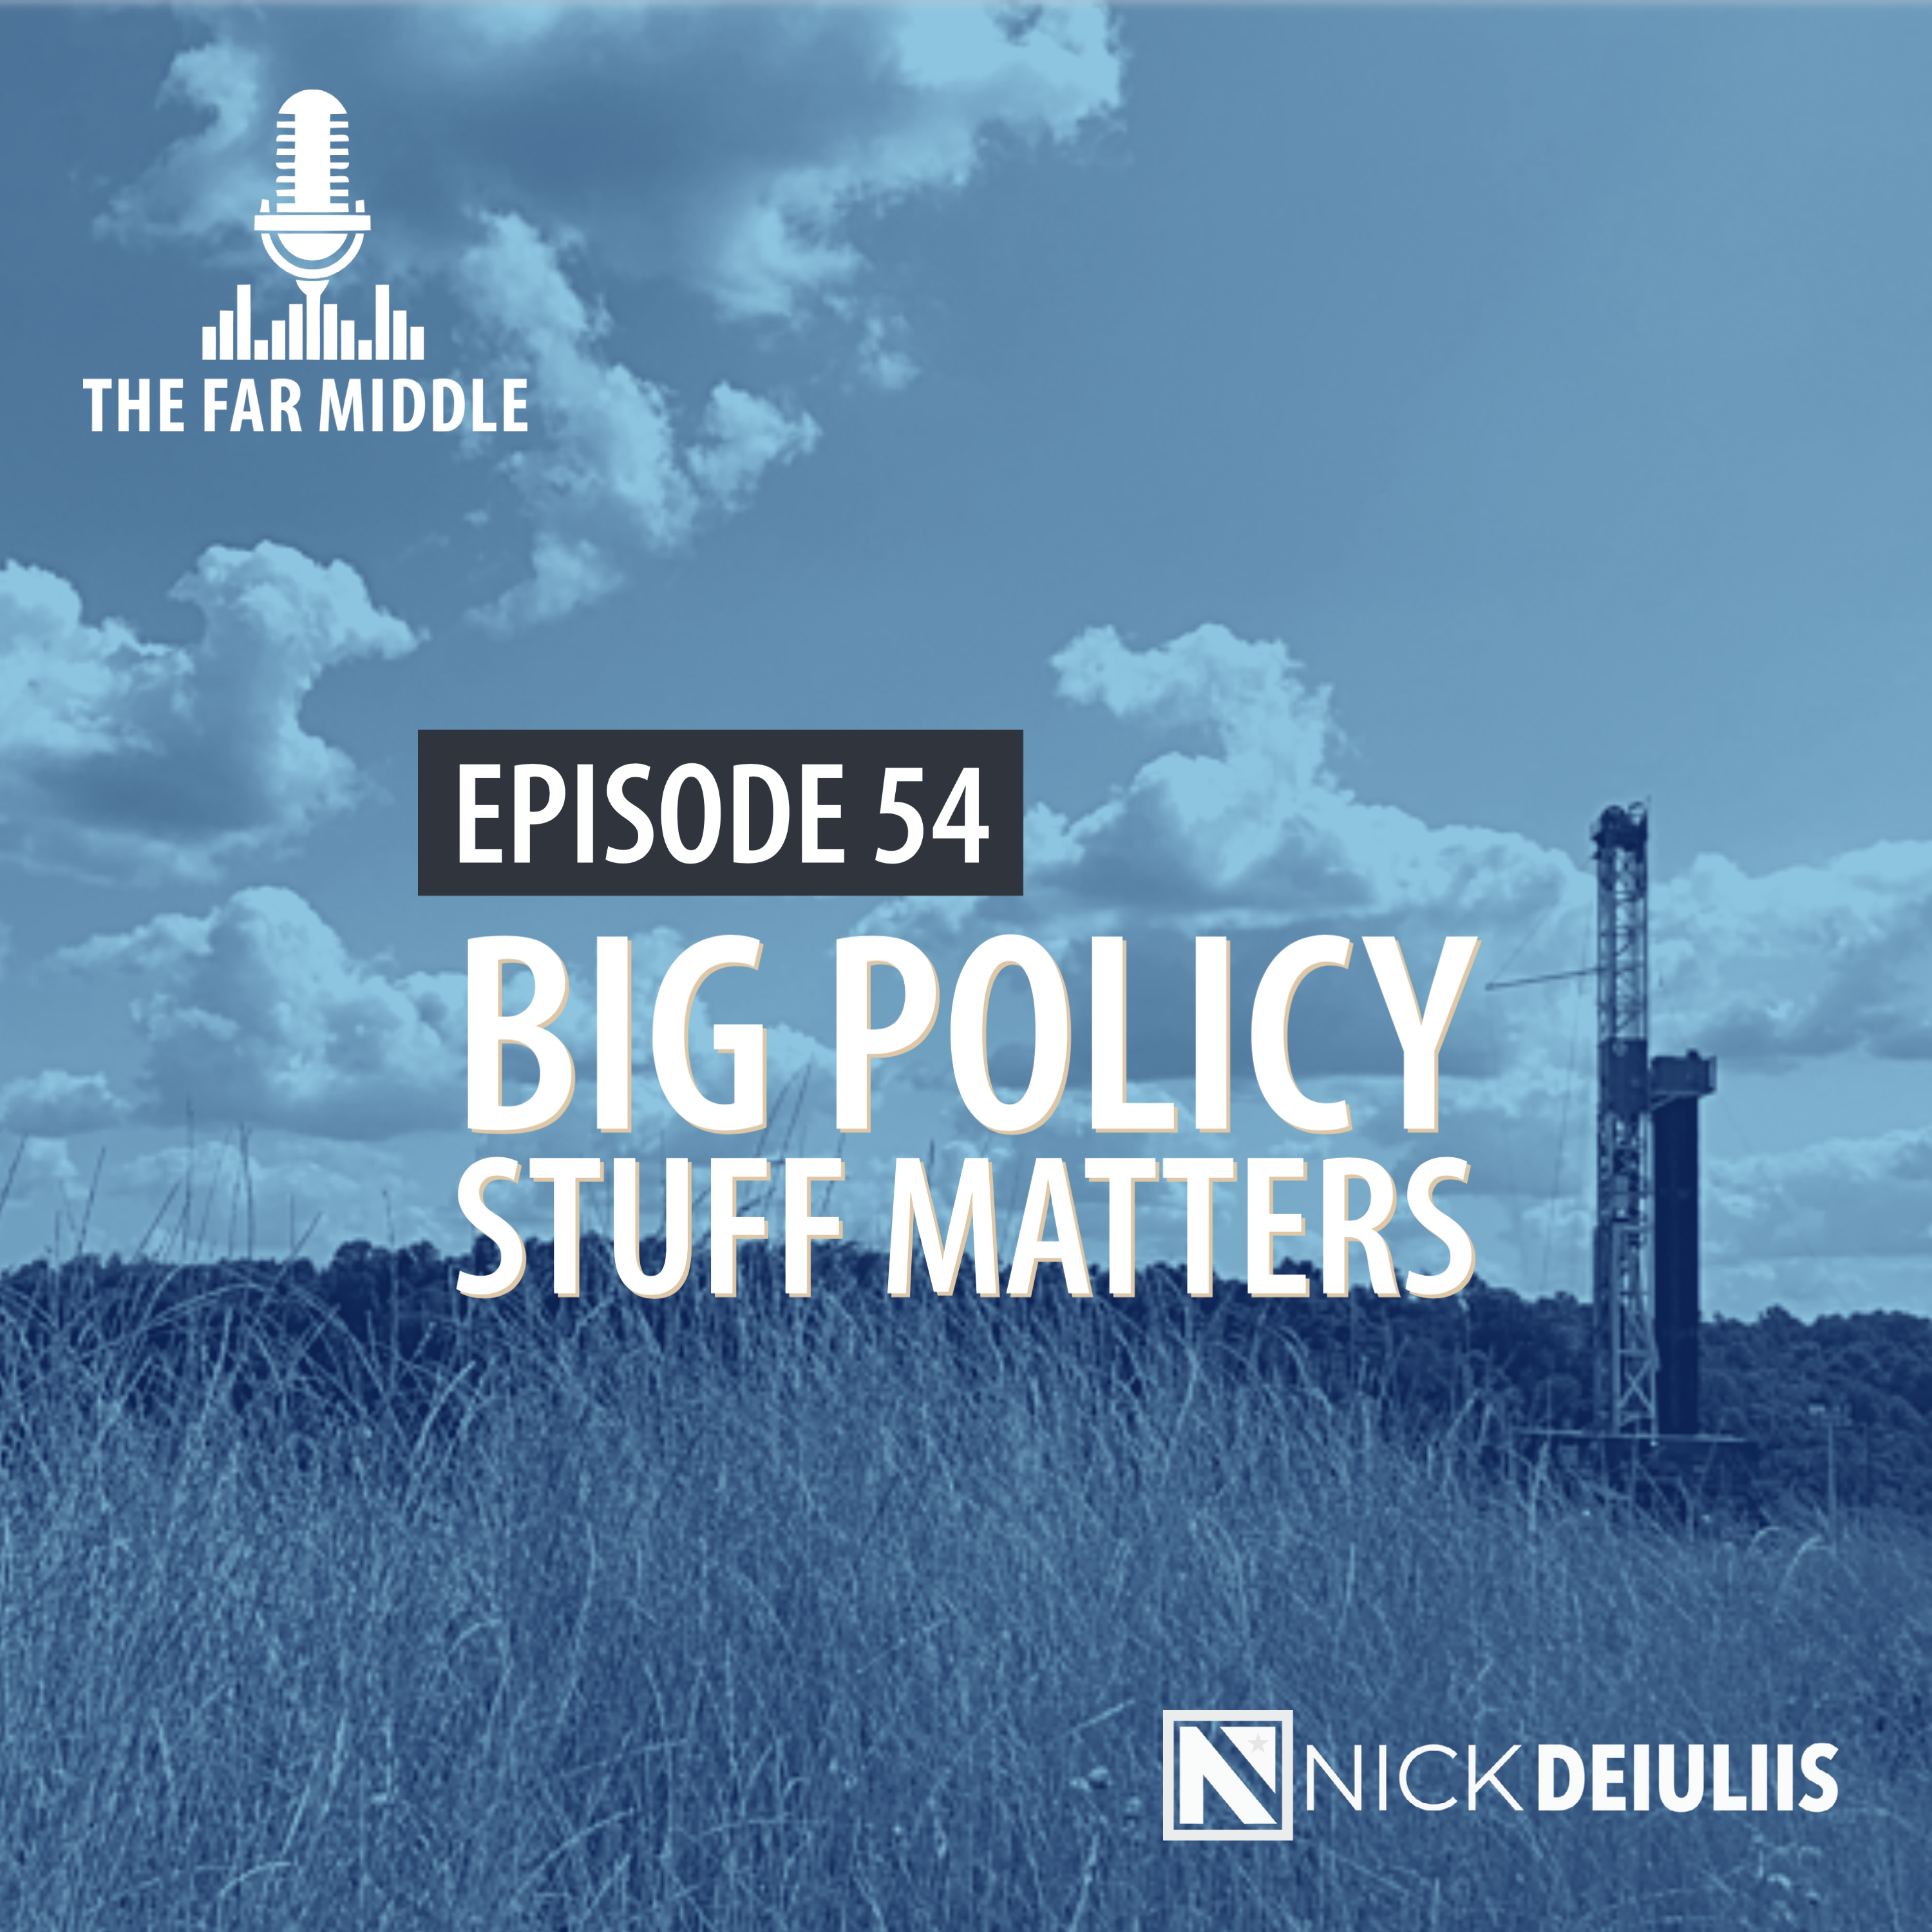 Big Policy Stuff Matters